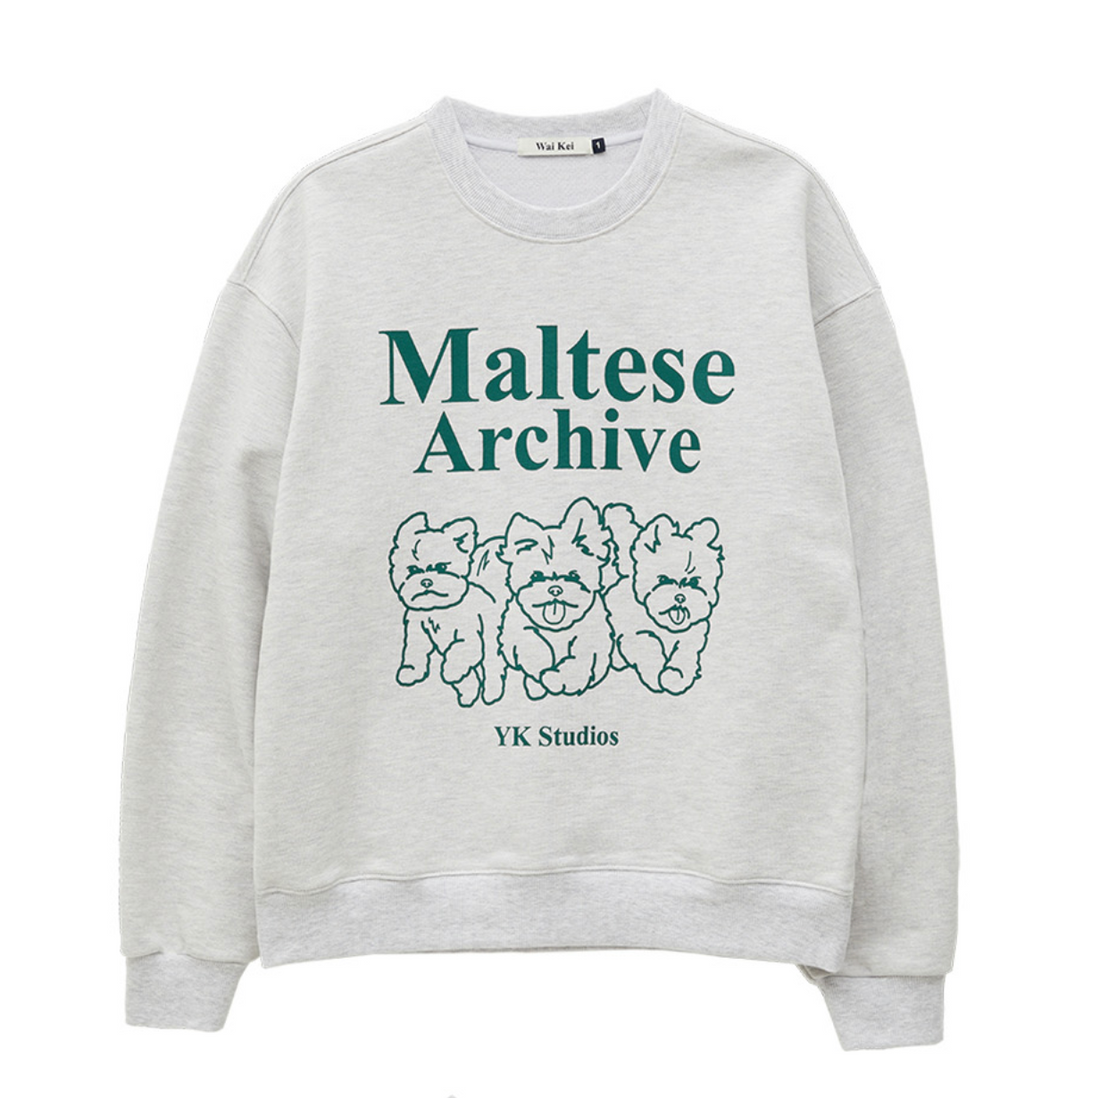 WAIKEI Maltese Archive Line Graphic Sweatshirts MELANGE WHITE